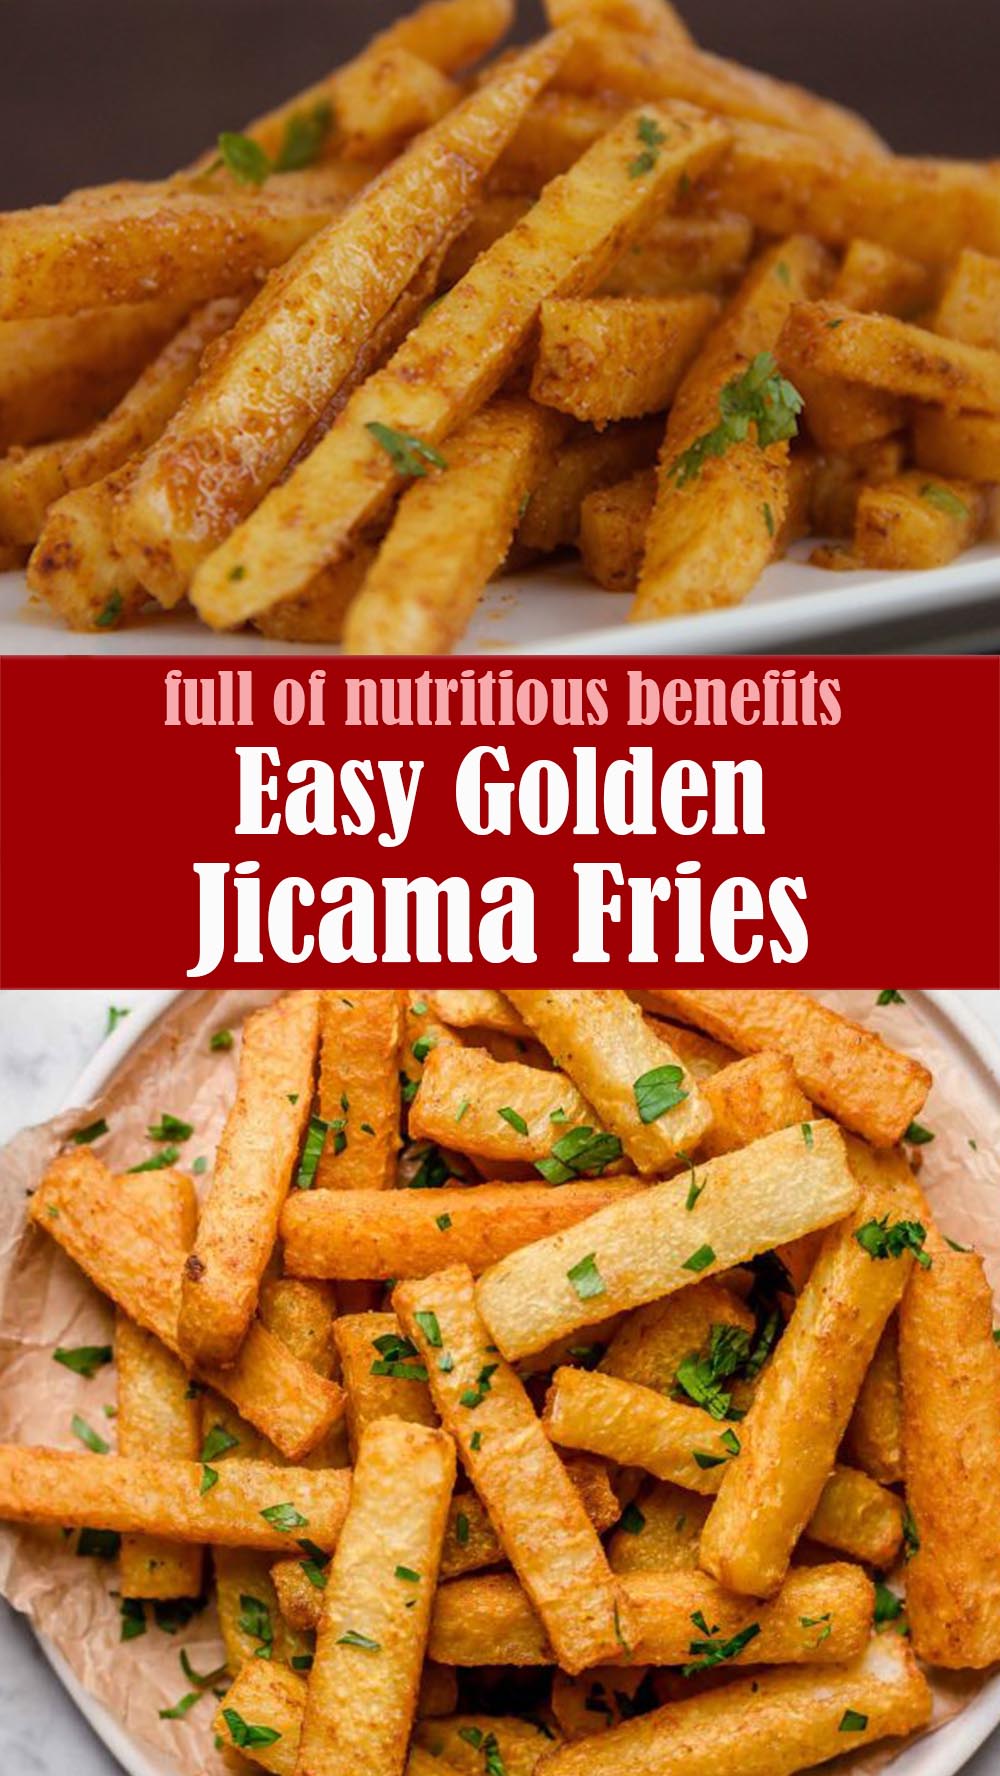 Easy Golden Jicama Fries